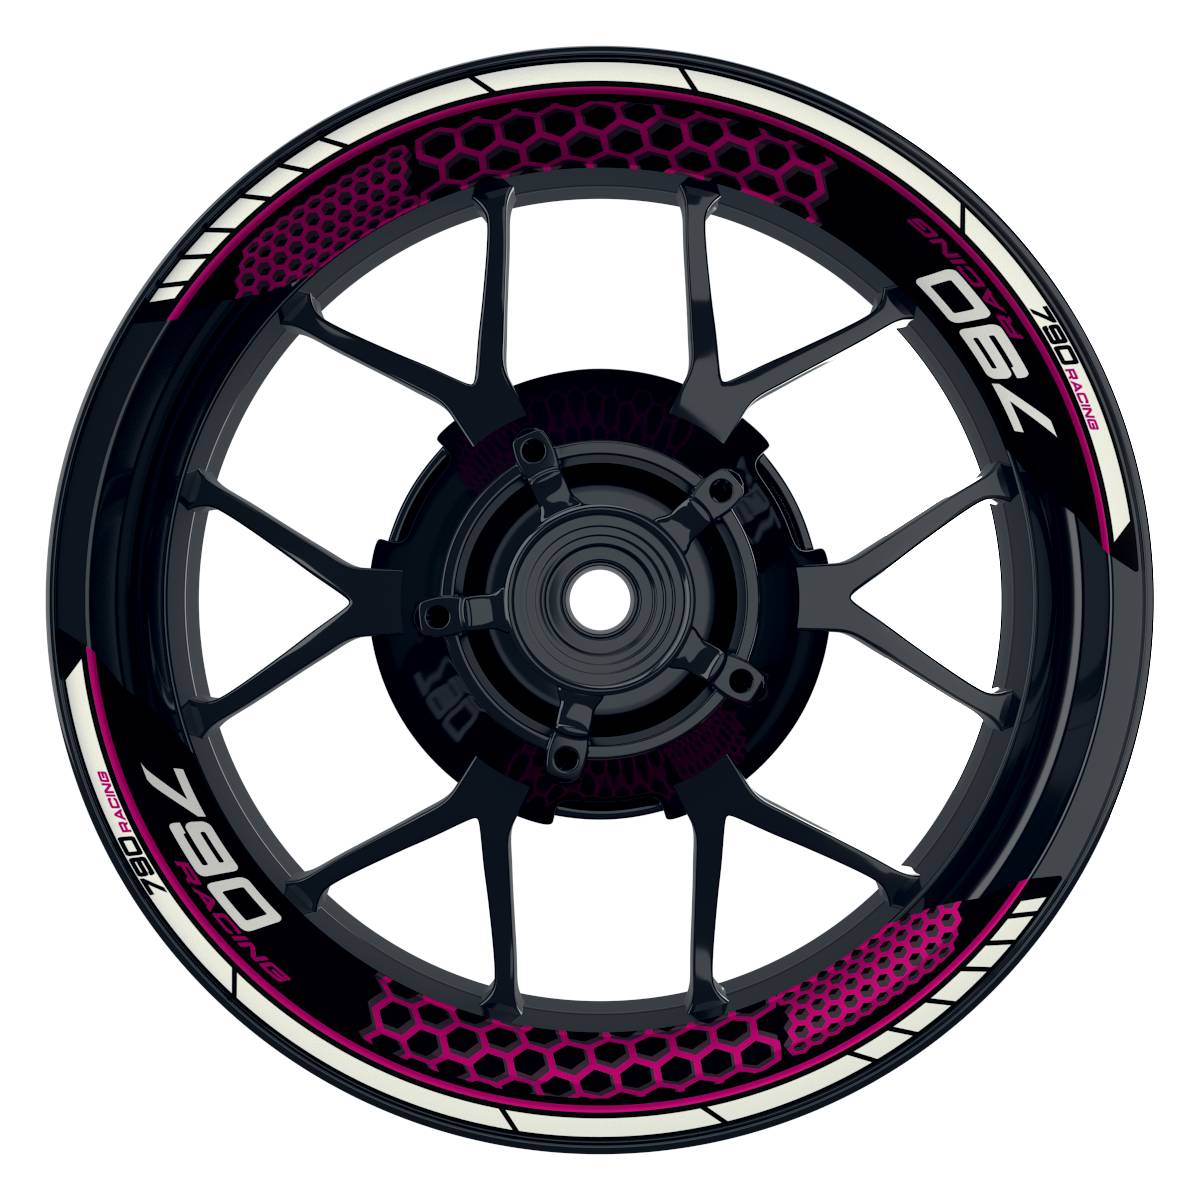 KTM Racing 790 Hexagon schwarz pink Frontansicht